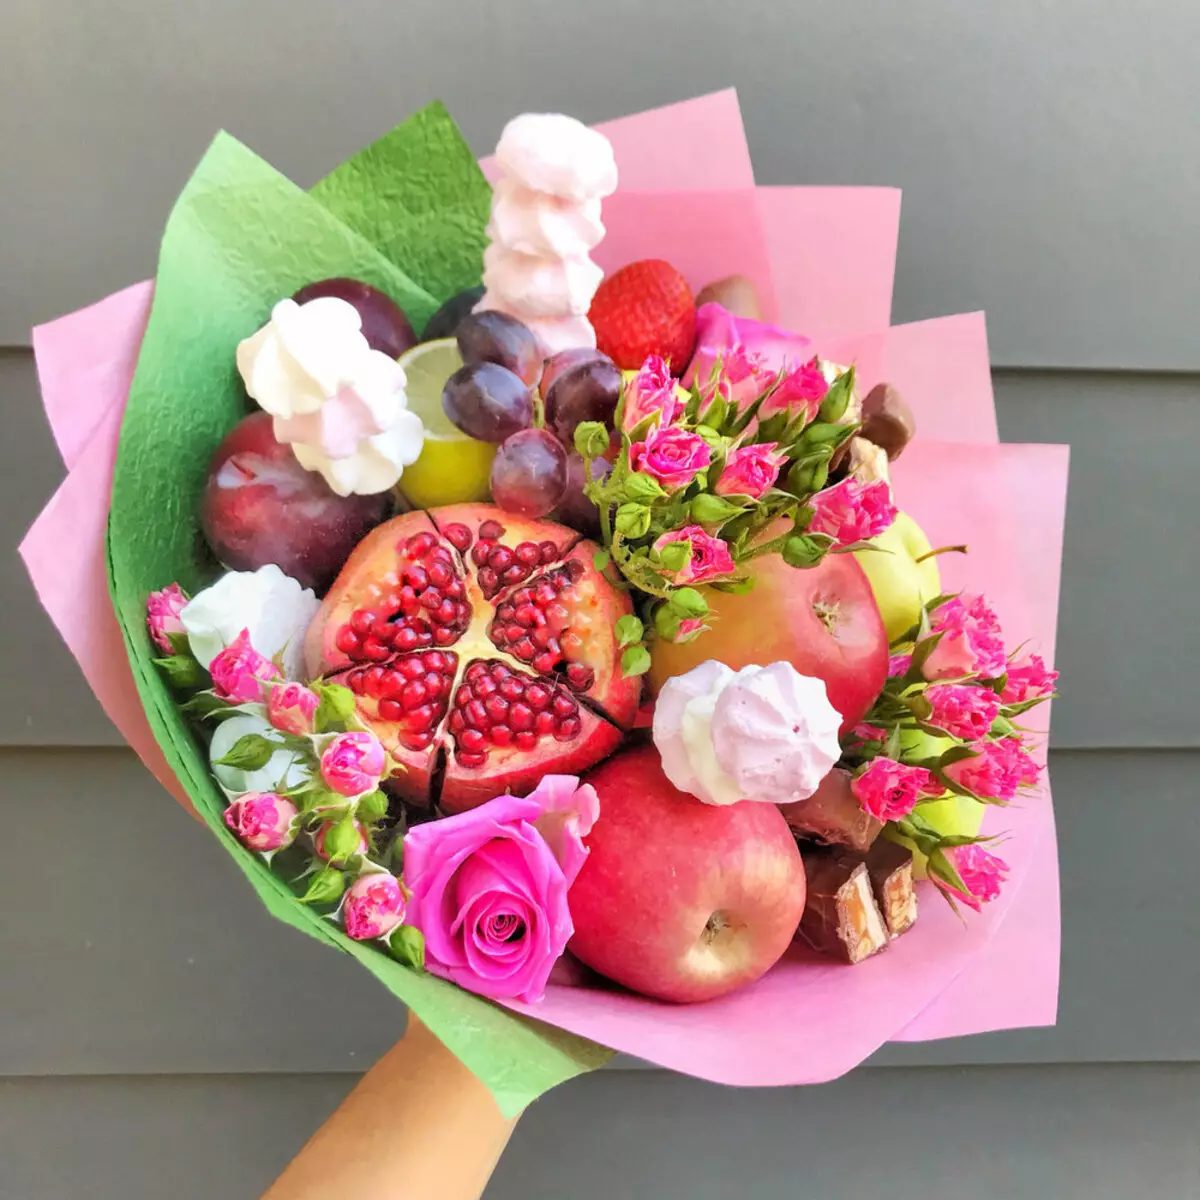 Bouquets pada 8 Maret dengan tangan mereka sendiri: Karangan bunga yang tidak biasa untuk Ibu. Bagaimana cara membuat banyak kertas dan karangan bunga asli manis? 18193_12